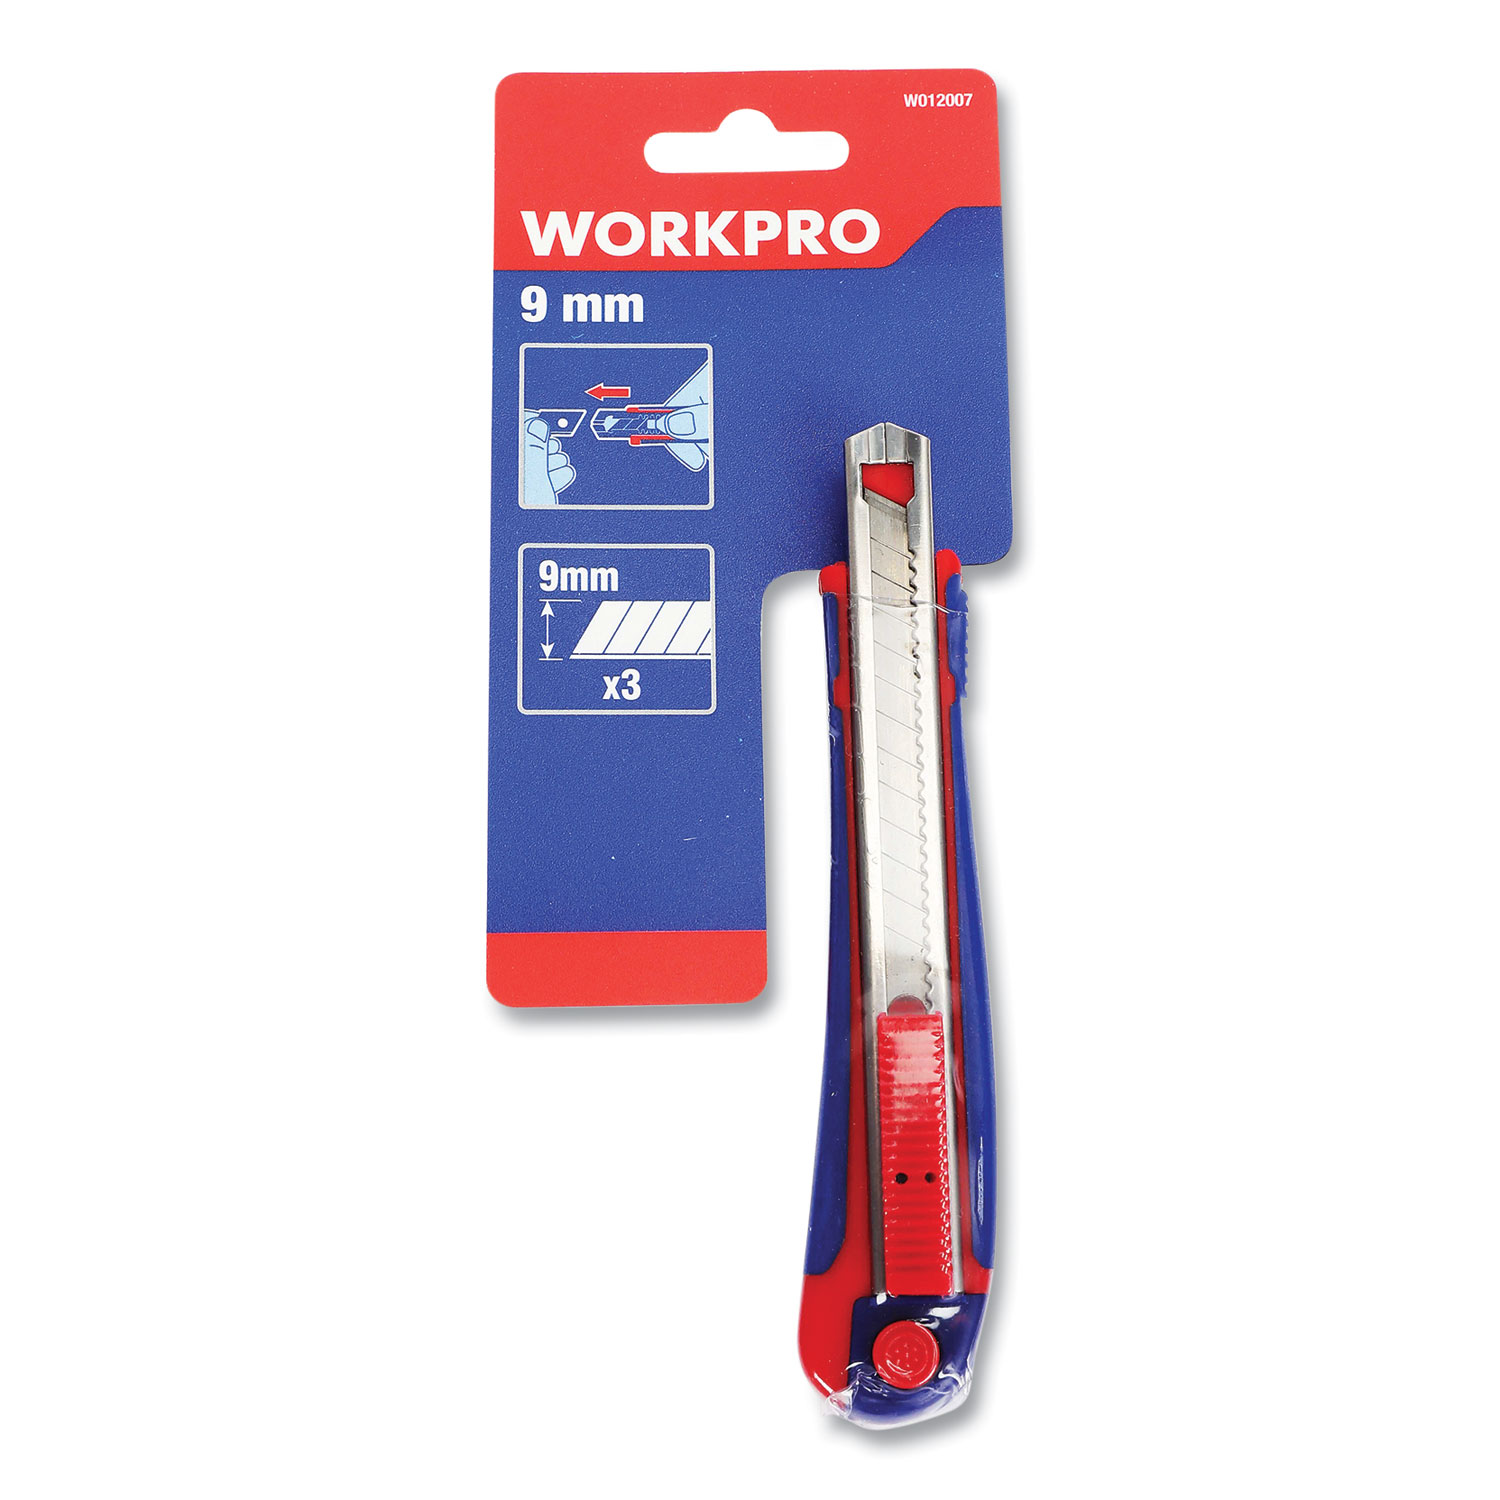 Workpro® Plastic Snap-Off Knife, 9 mm, 3 Self-Loading Blades